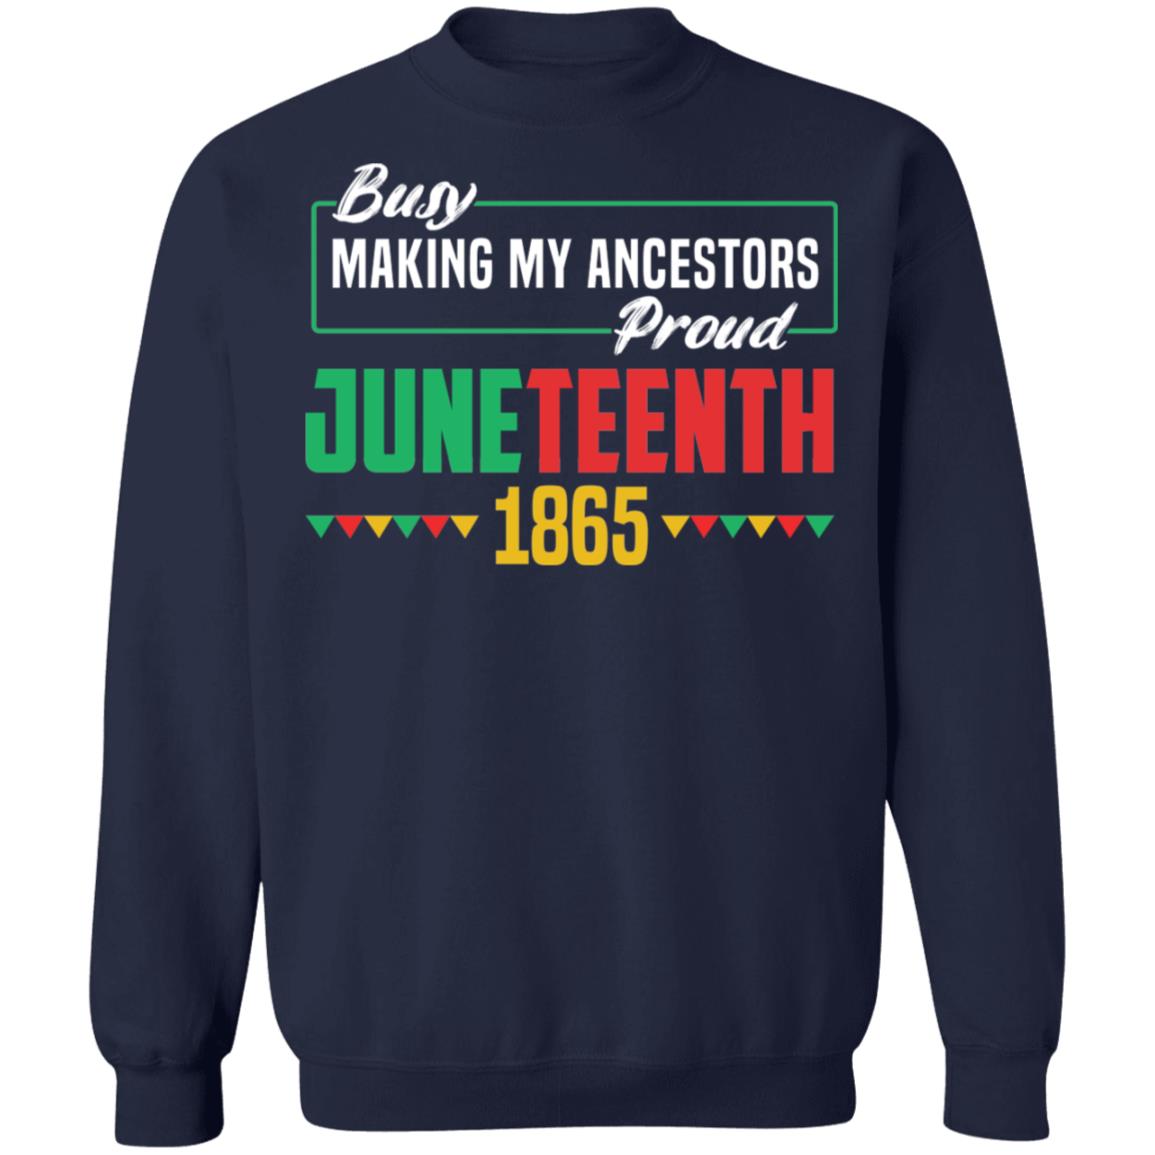 Busy Making My Ancestors Proud - Juneteenth T-shirt Apparel Gearment Crewneck Sweatshirt Navy S